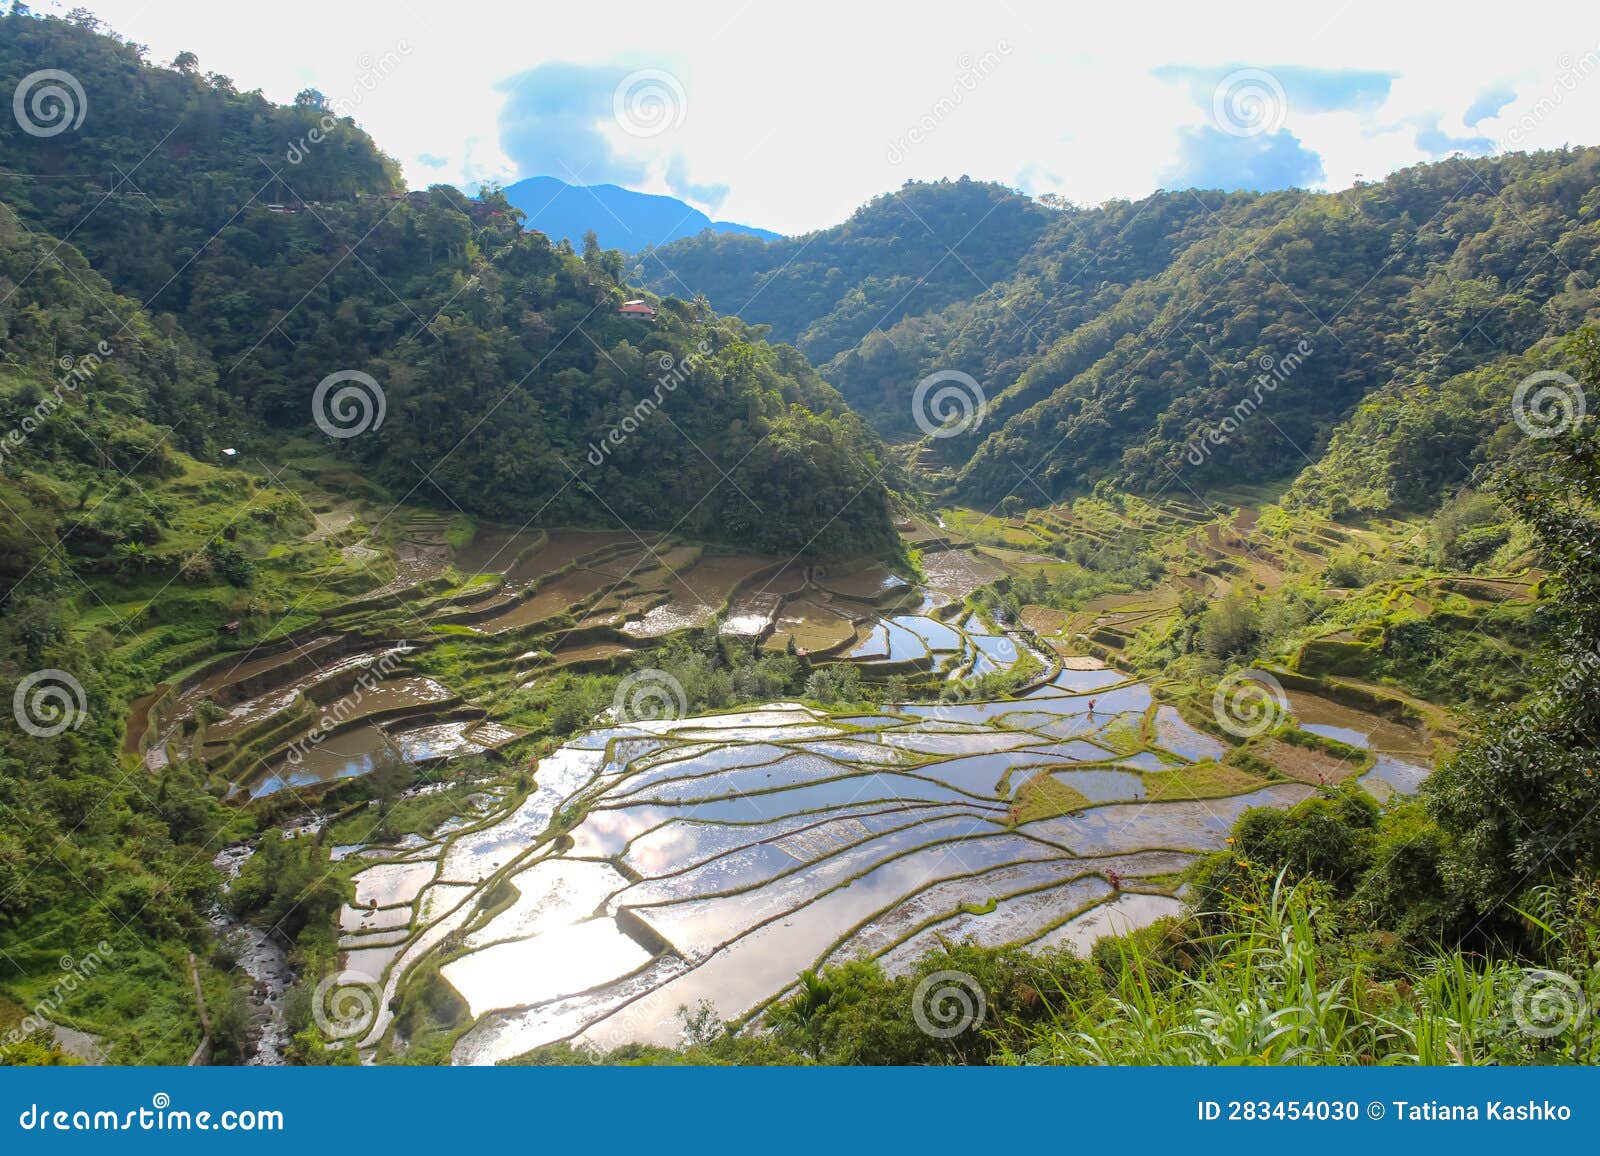 unesco batad rice terraces of the philippine cordilleras